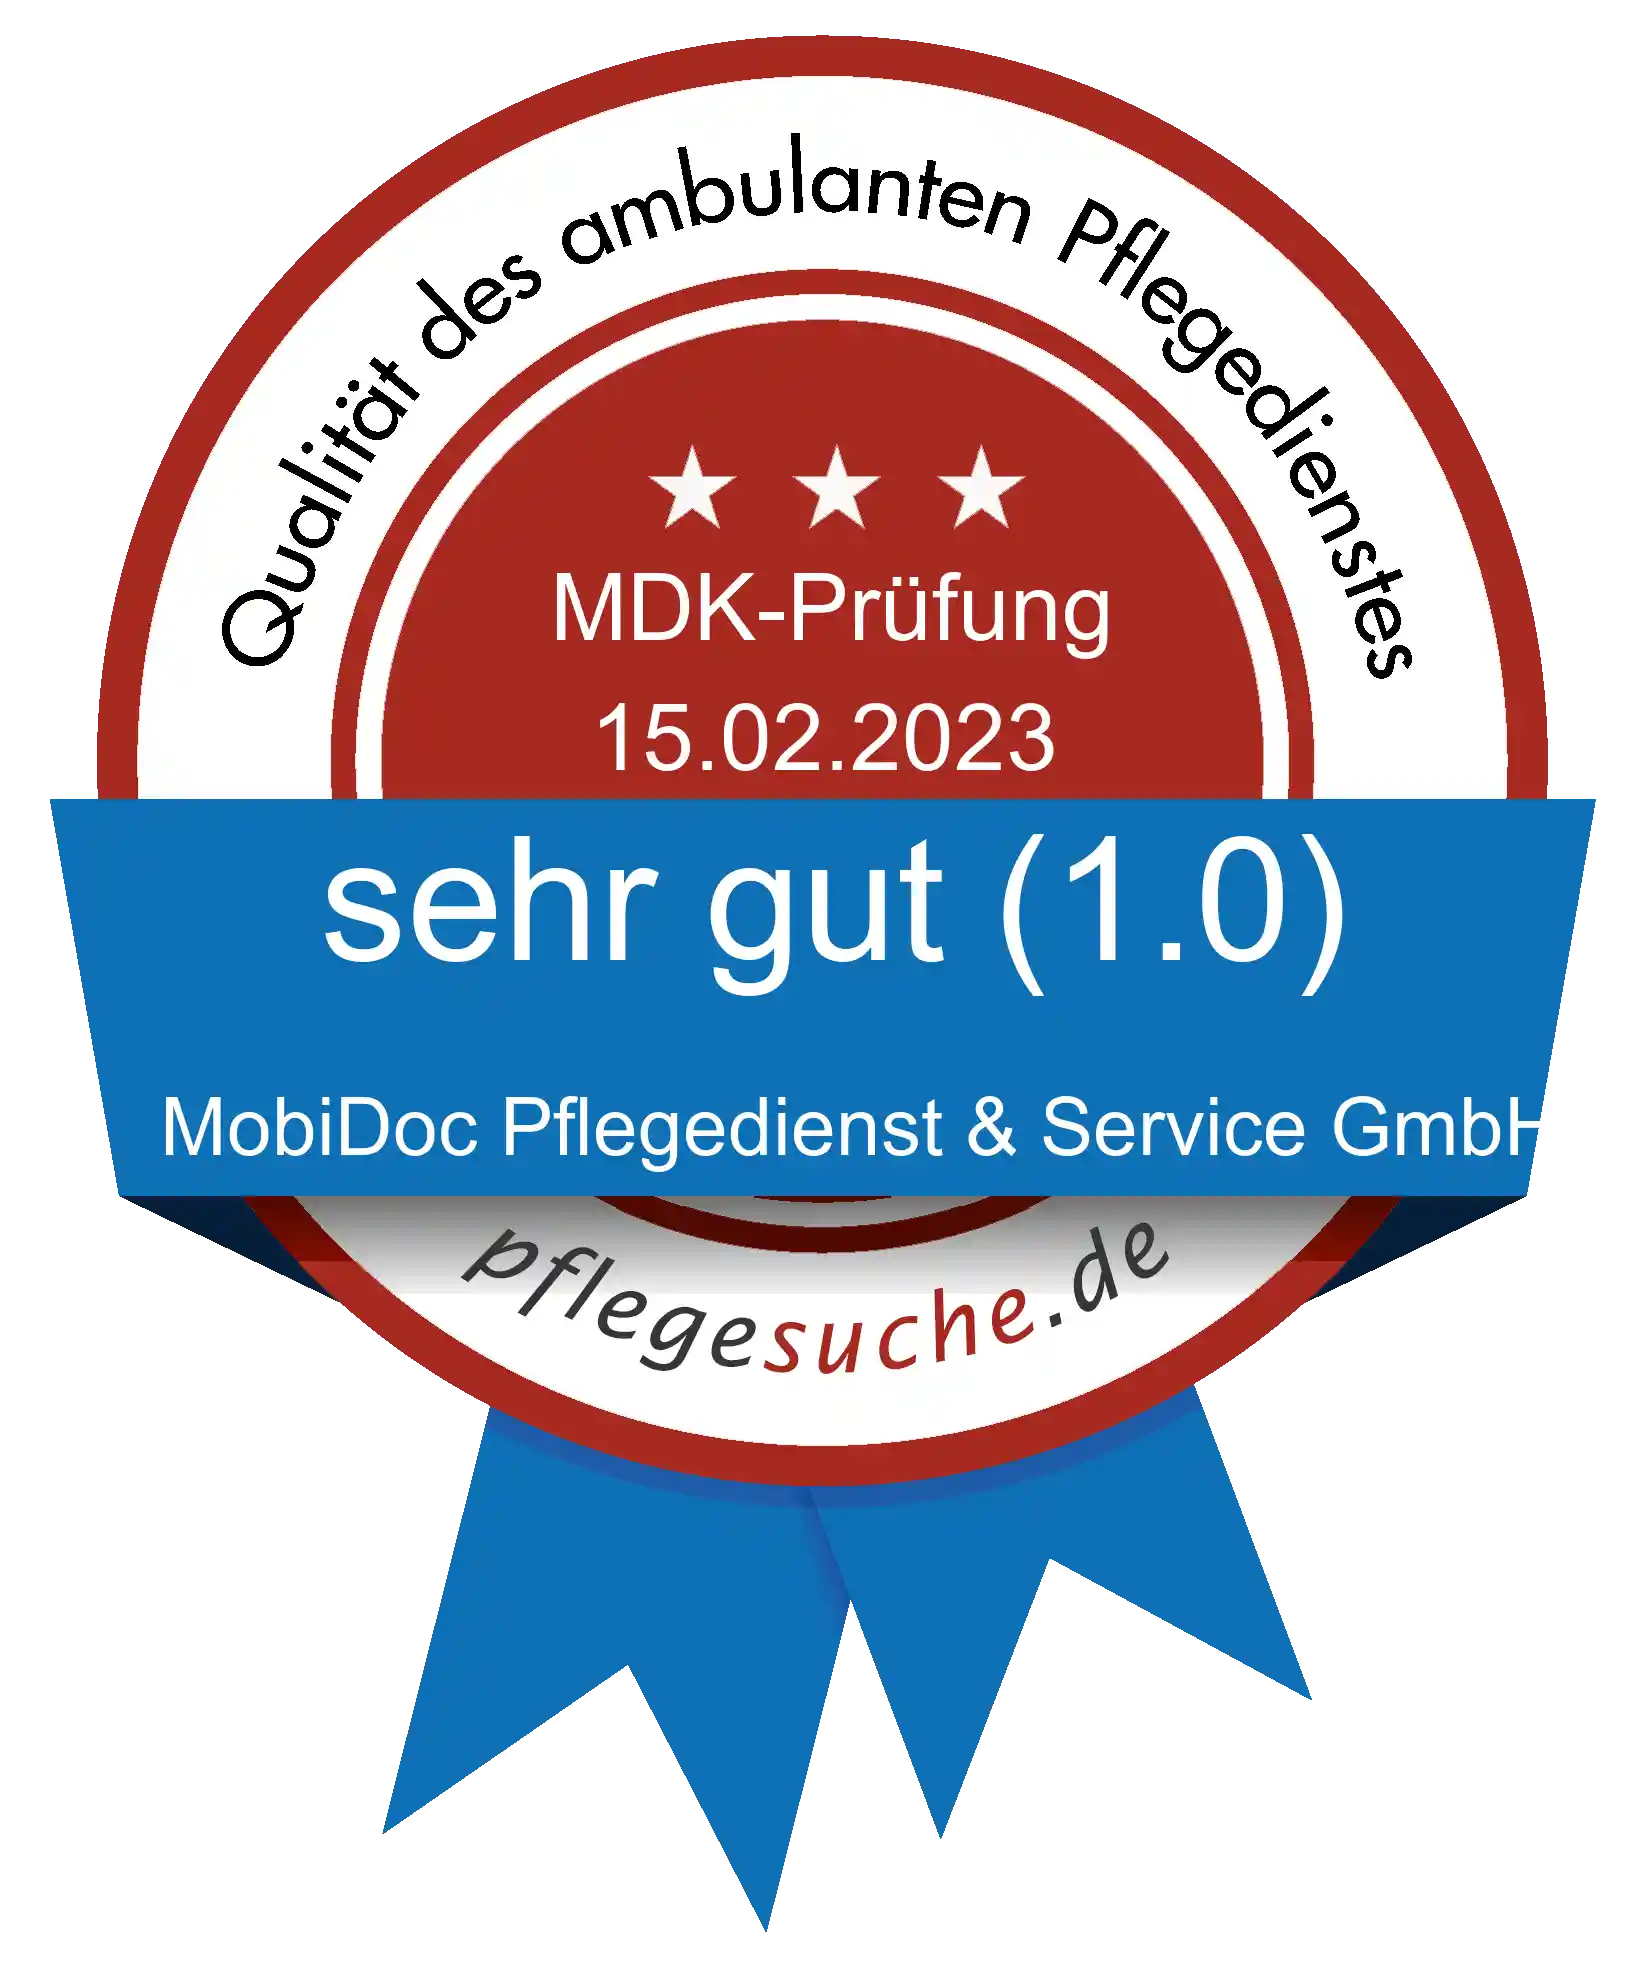 Siegel Benotung MobiDoc Pflegedienst & Service GmbH